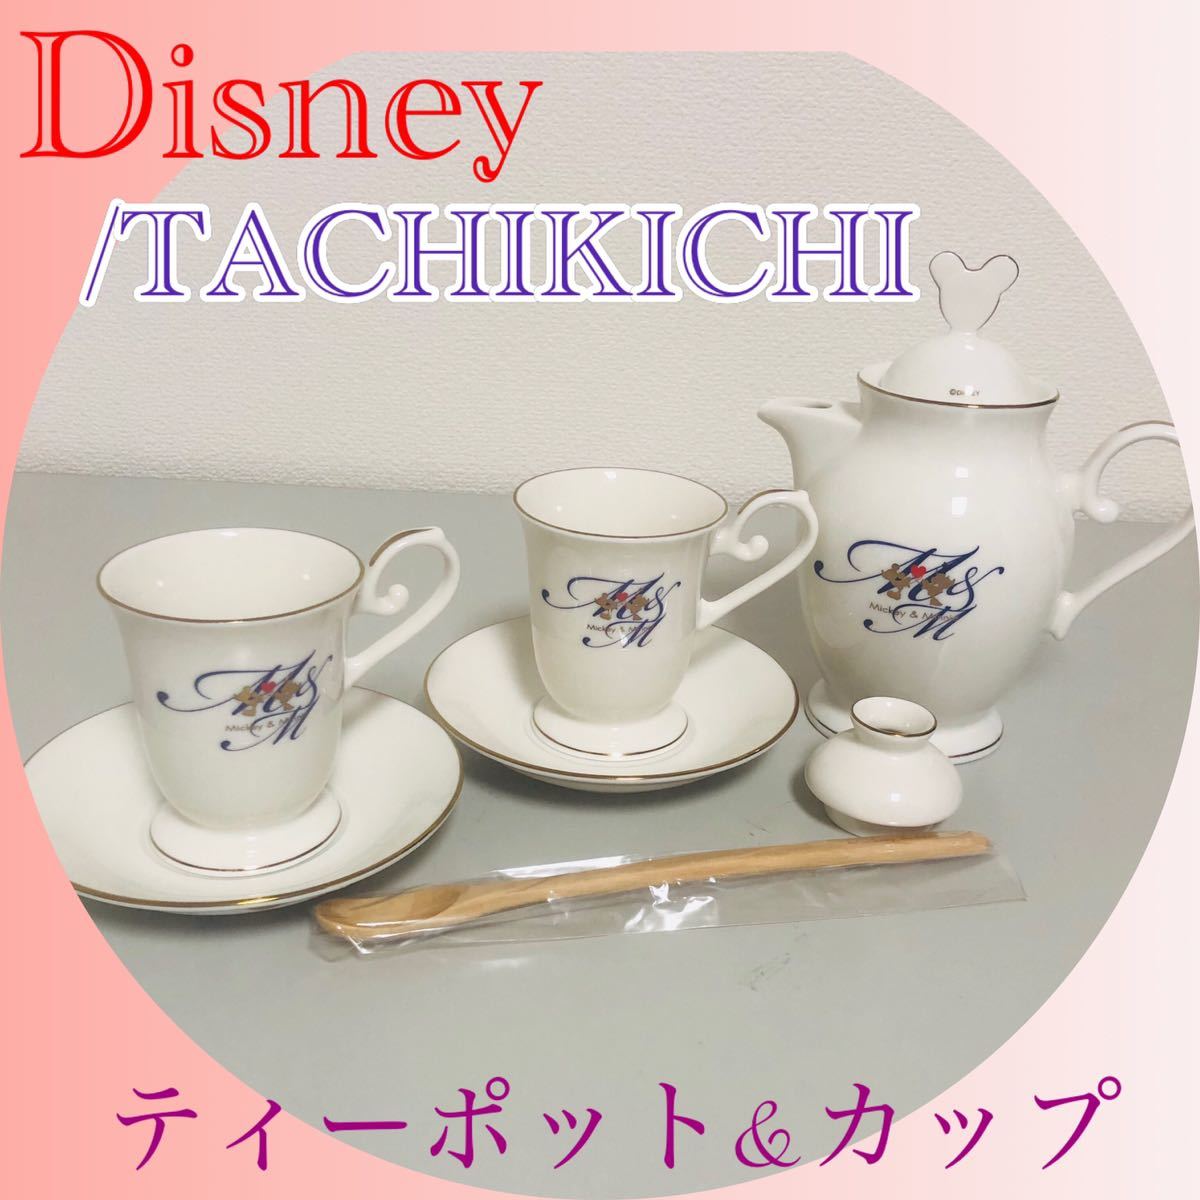 Disney/TACHIKICHI ディズニー/たち吉 ティーポットカップ&ソーサー スプーンセット_画像1